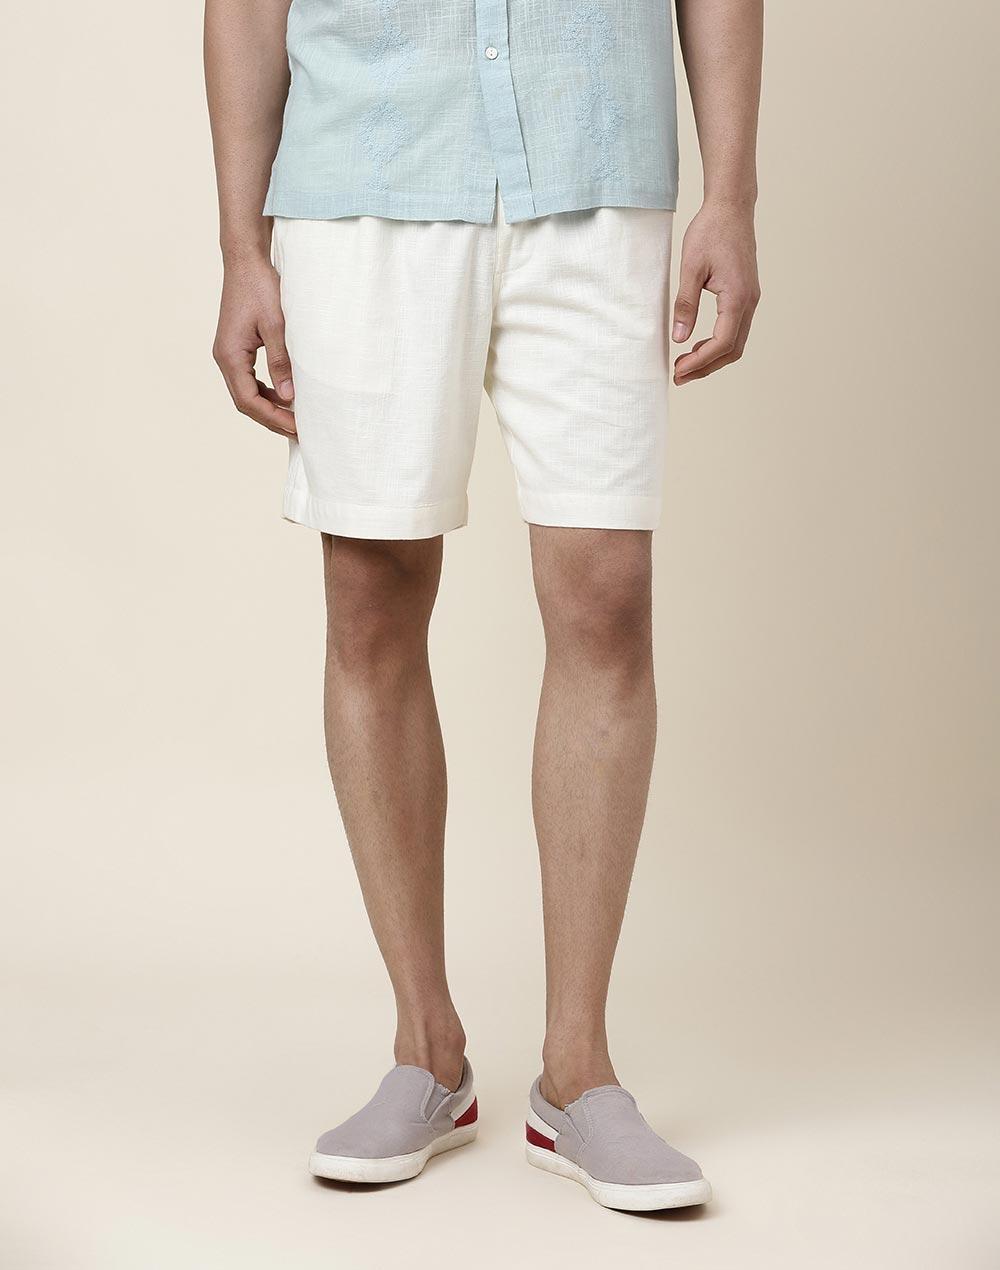 off white cotton shorts